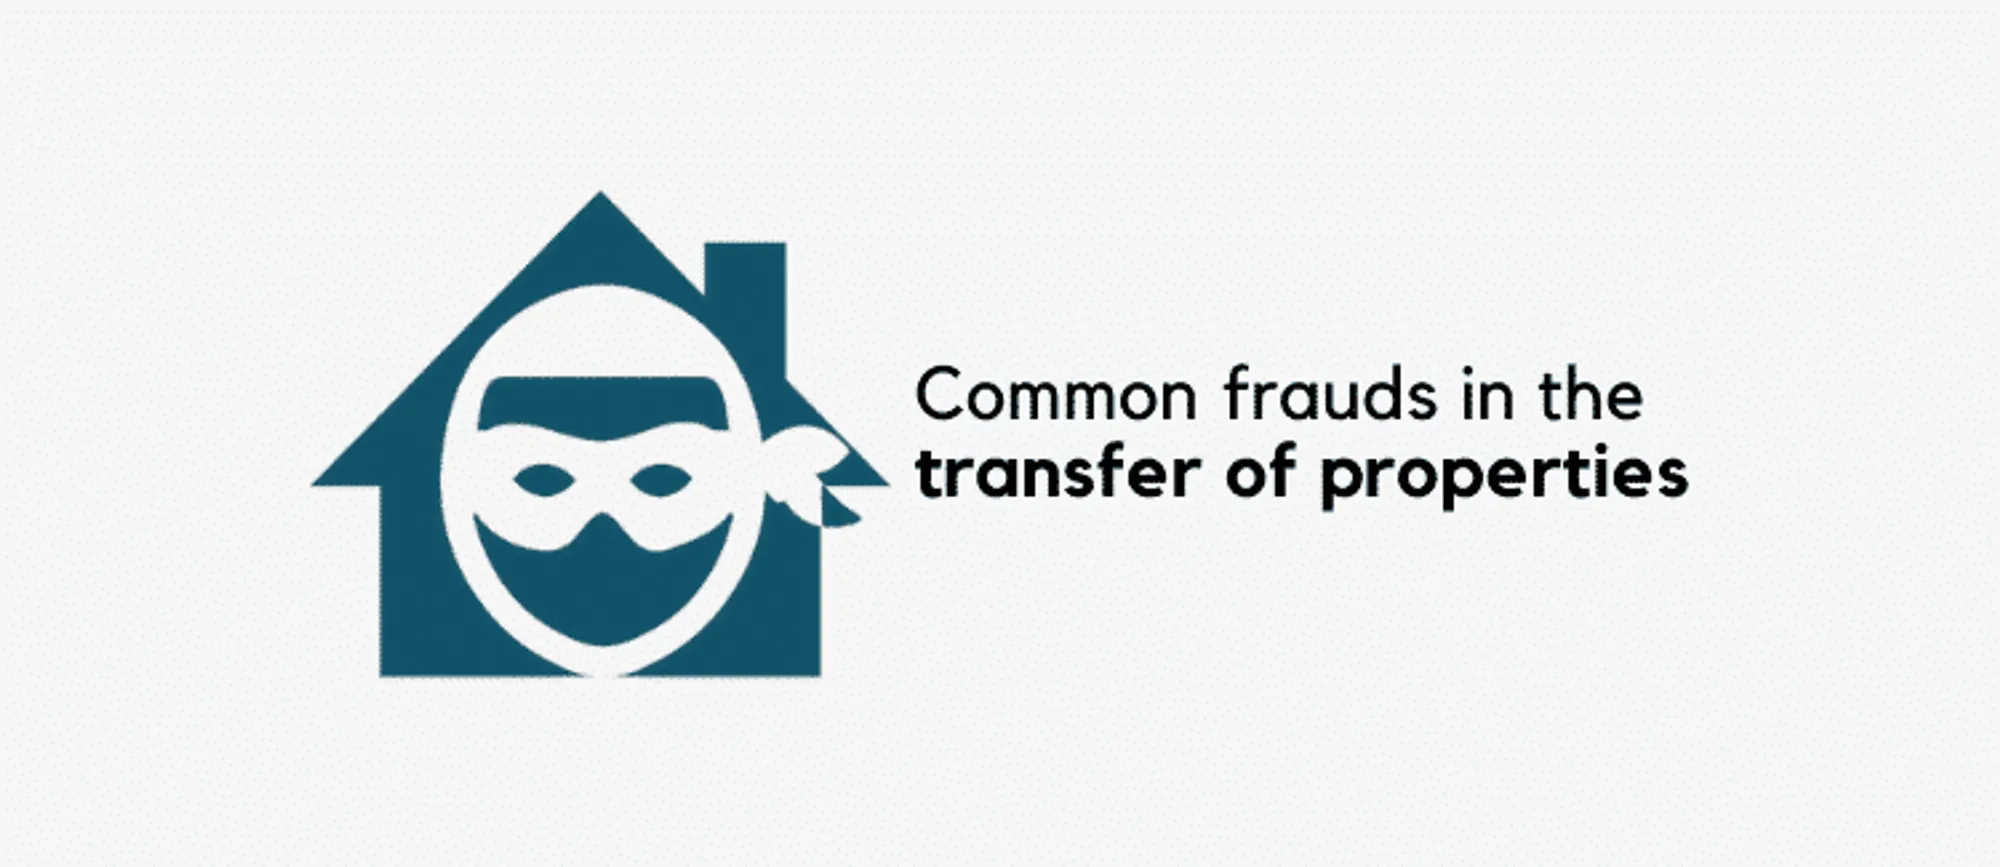 Common frauds